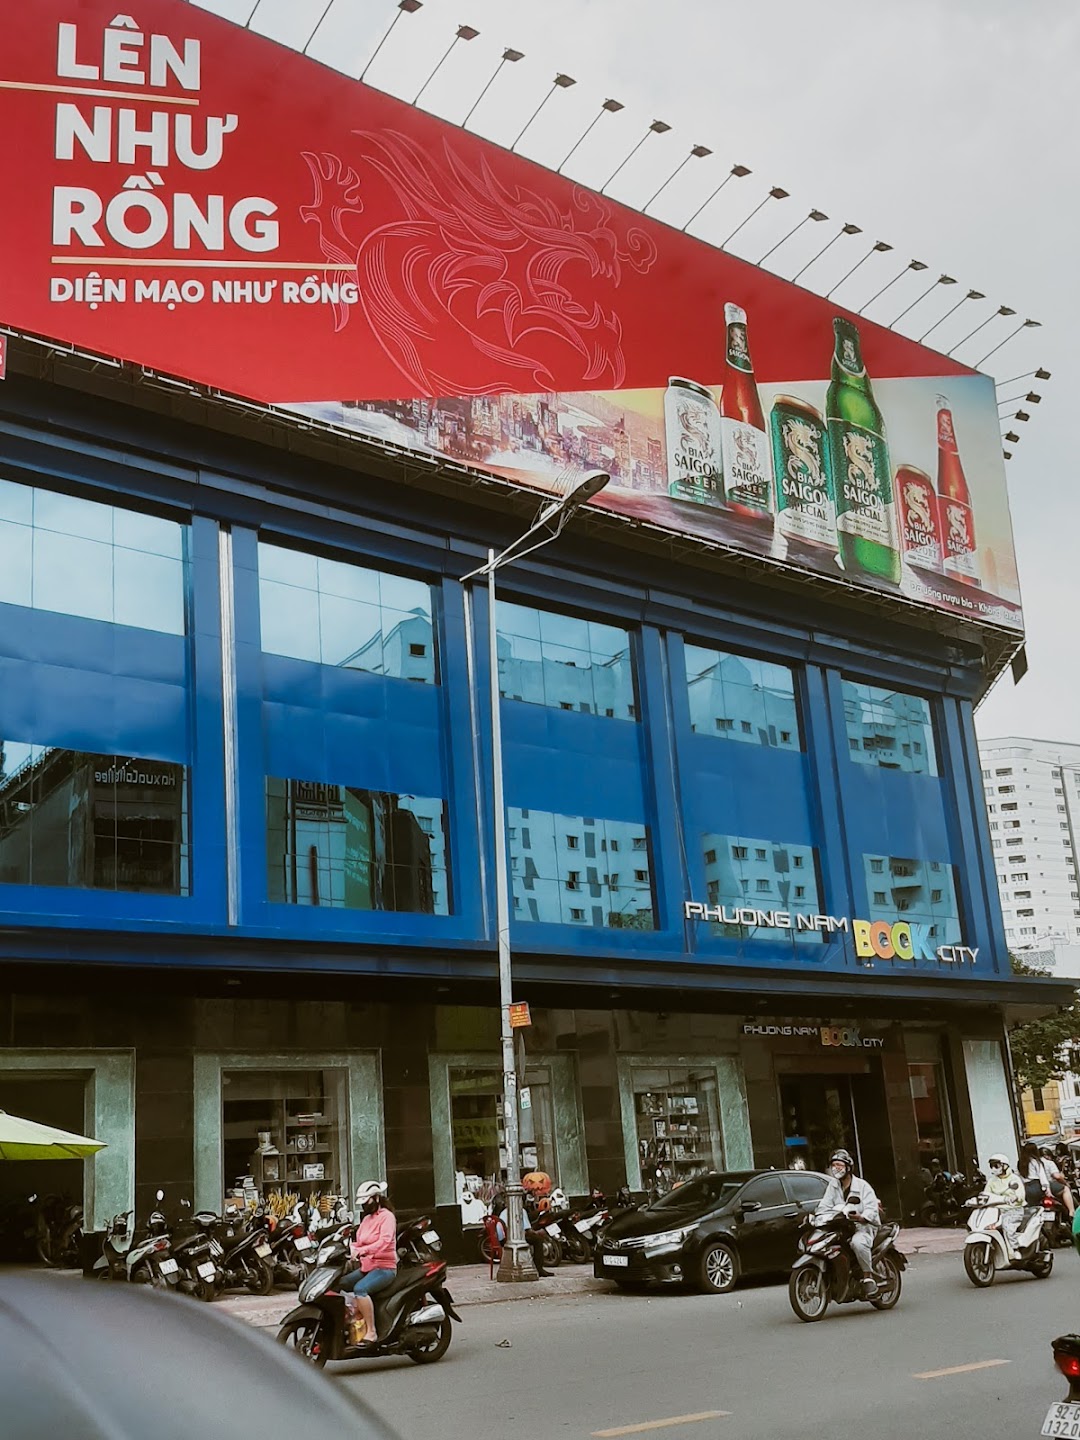 Phương Nam Book City Saigon Center